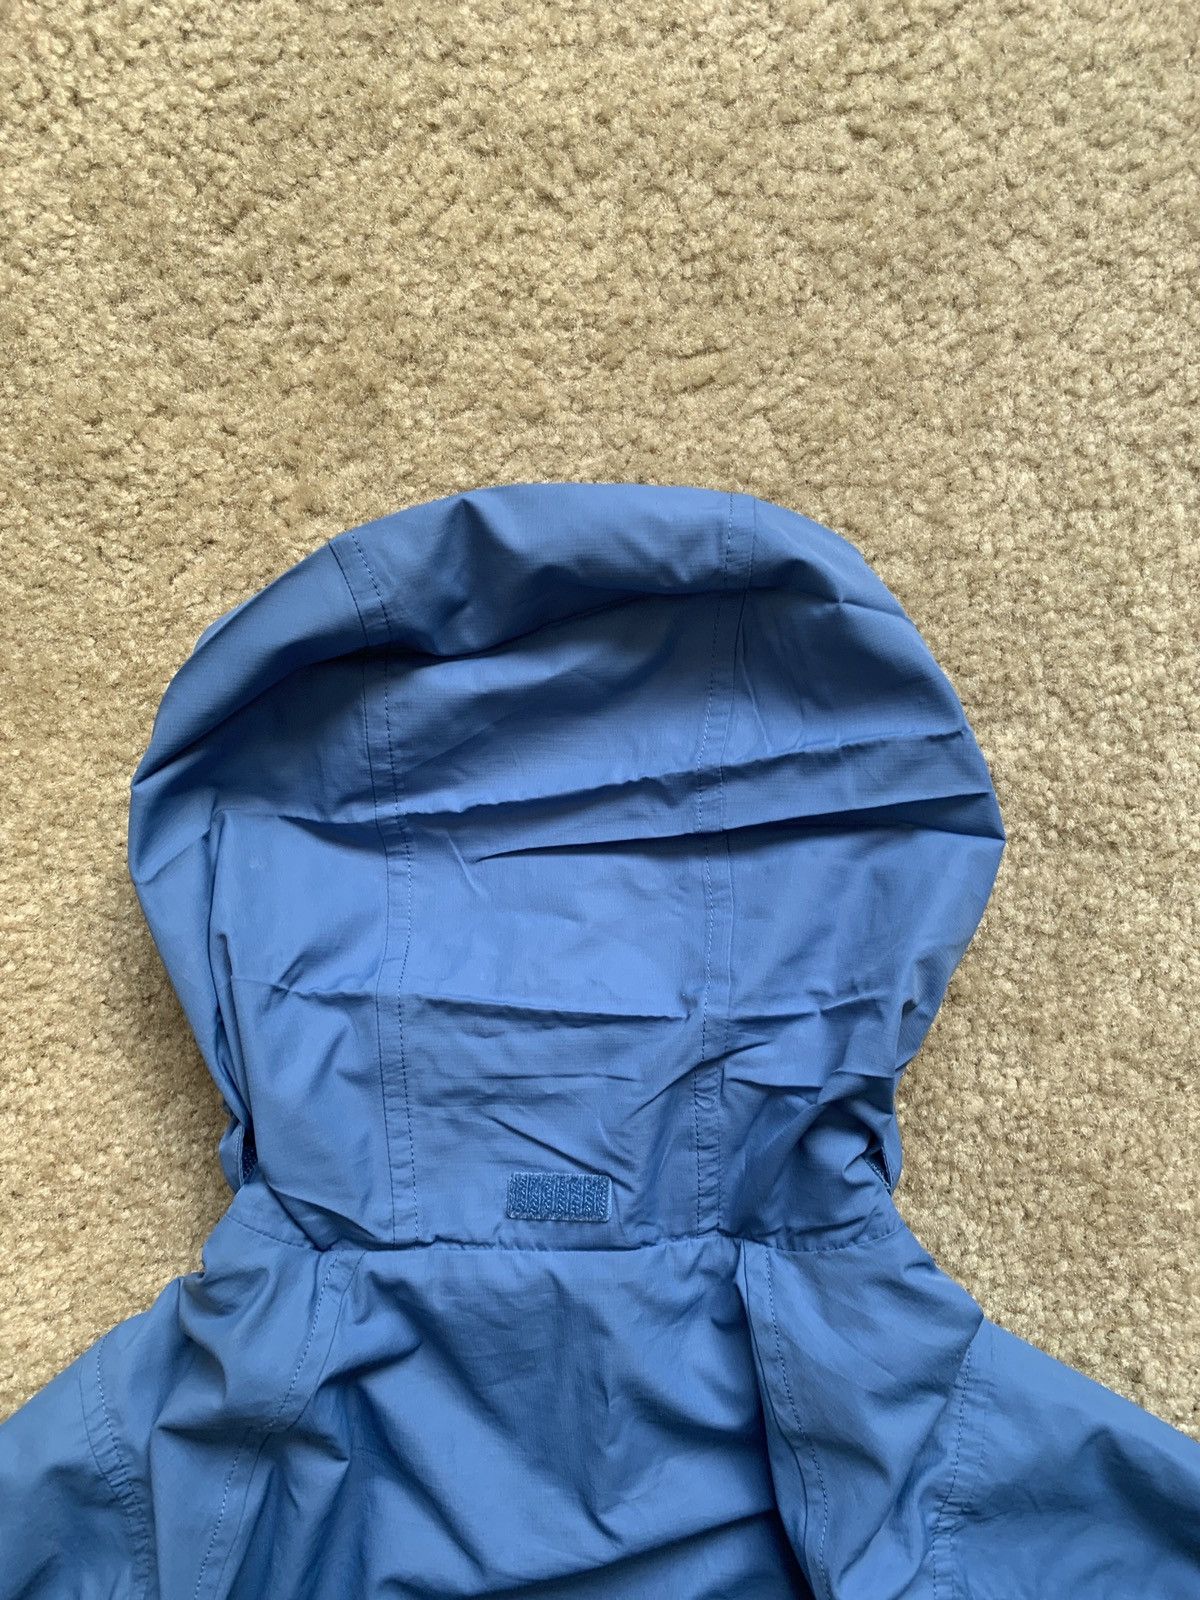 Rei Rei Raincoat Jacket (Blue) Size US S / EU 44-46 / 1 - 12 Thumbnail